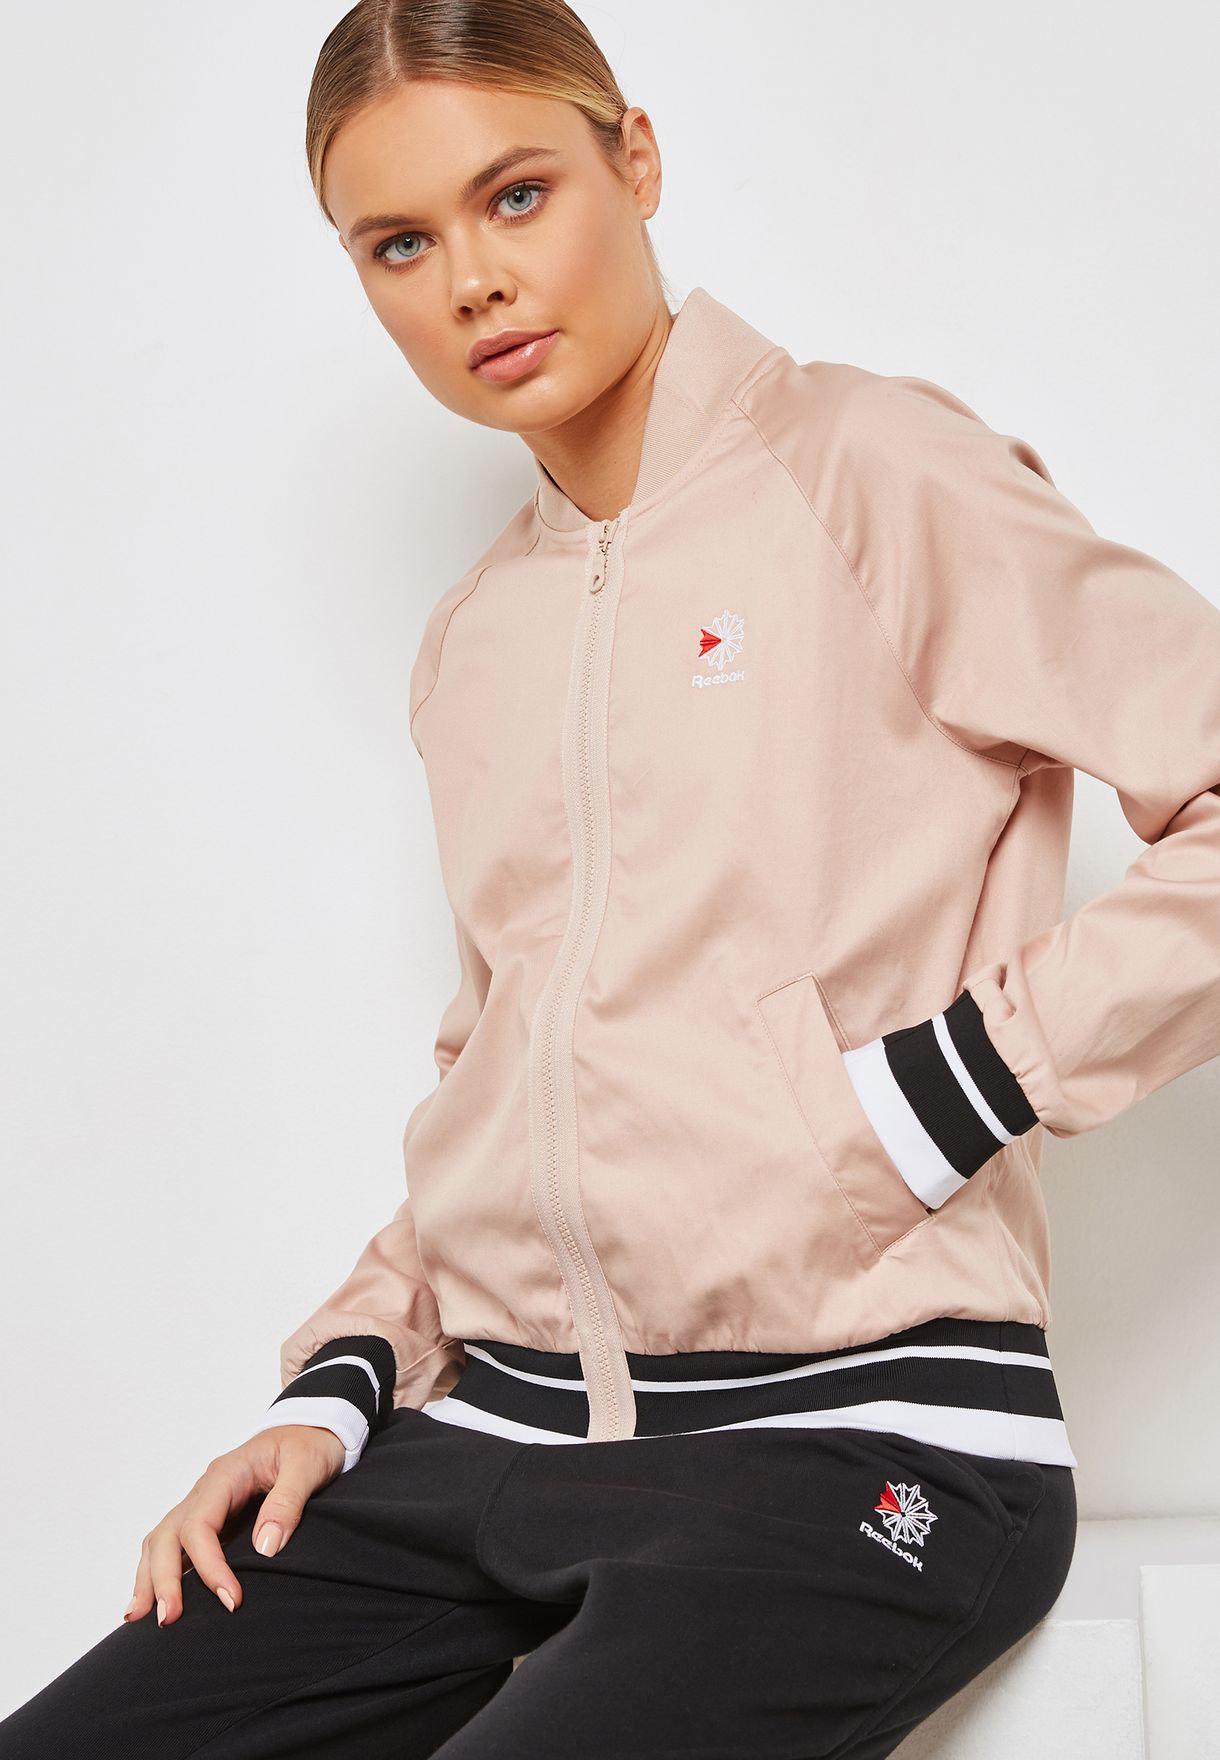 reebok classic jacket womens pink